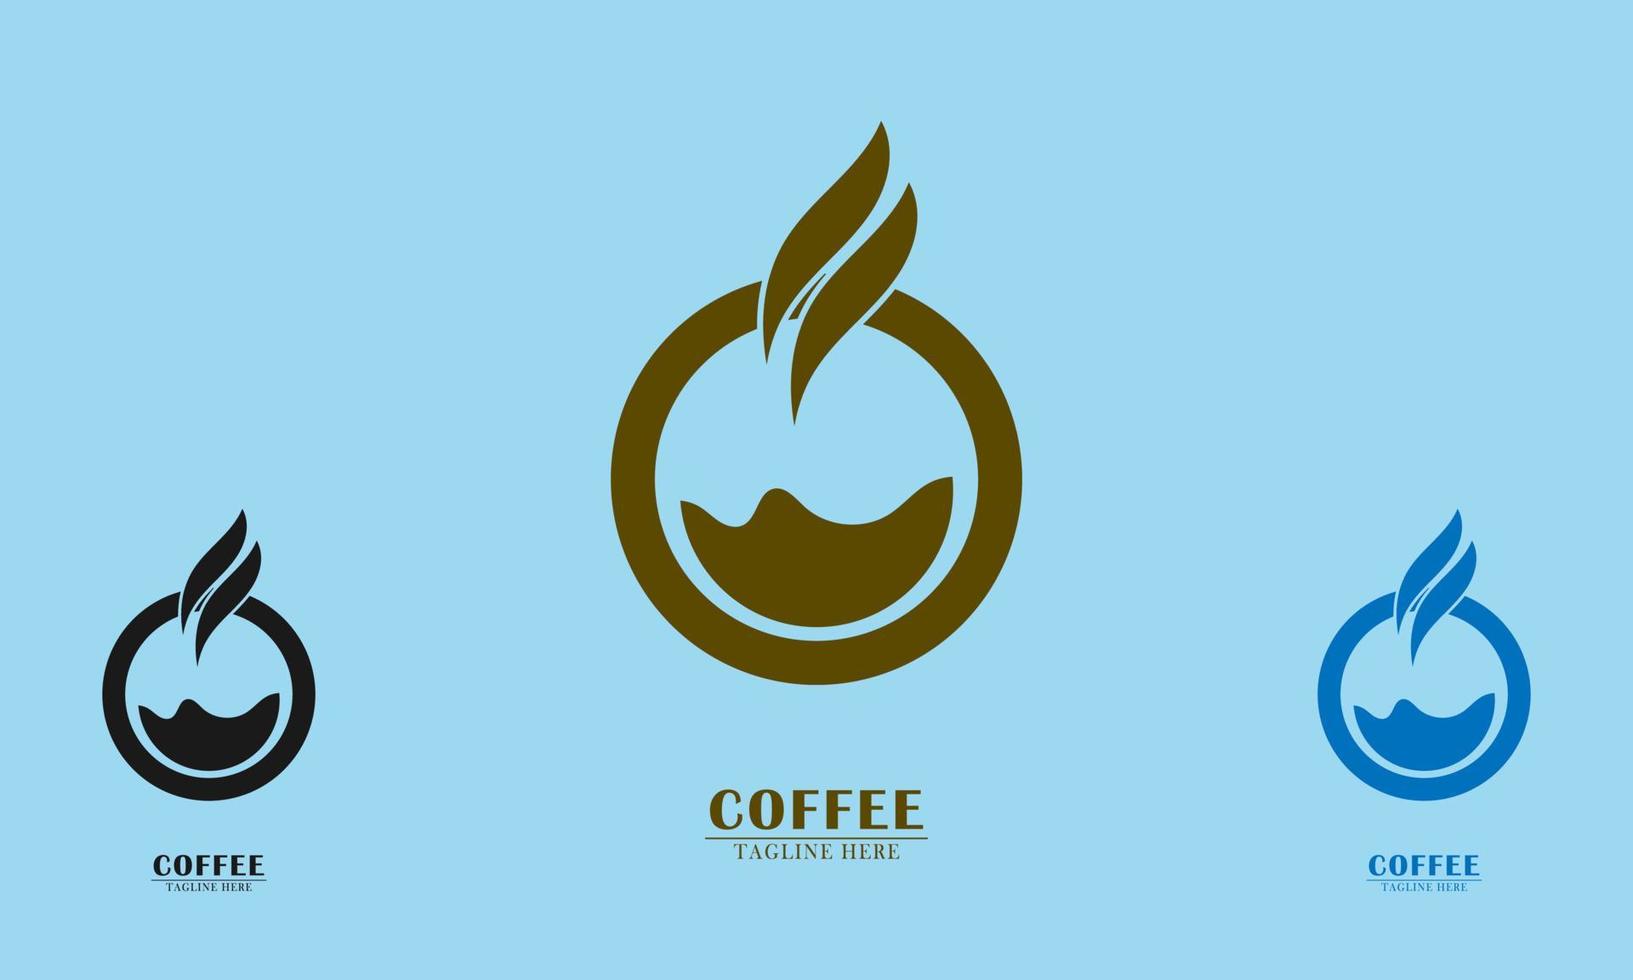 água de café e ícone do logotipo do vapor vetor